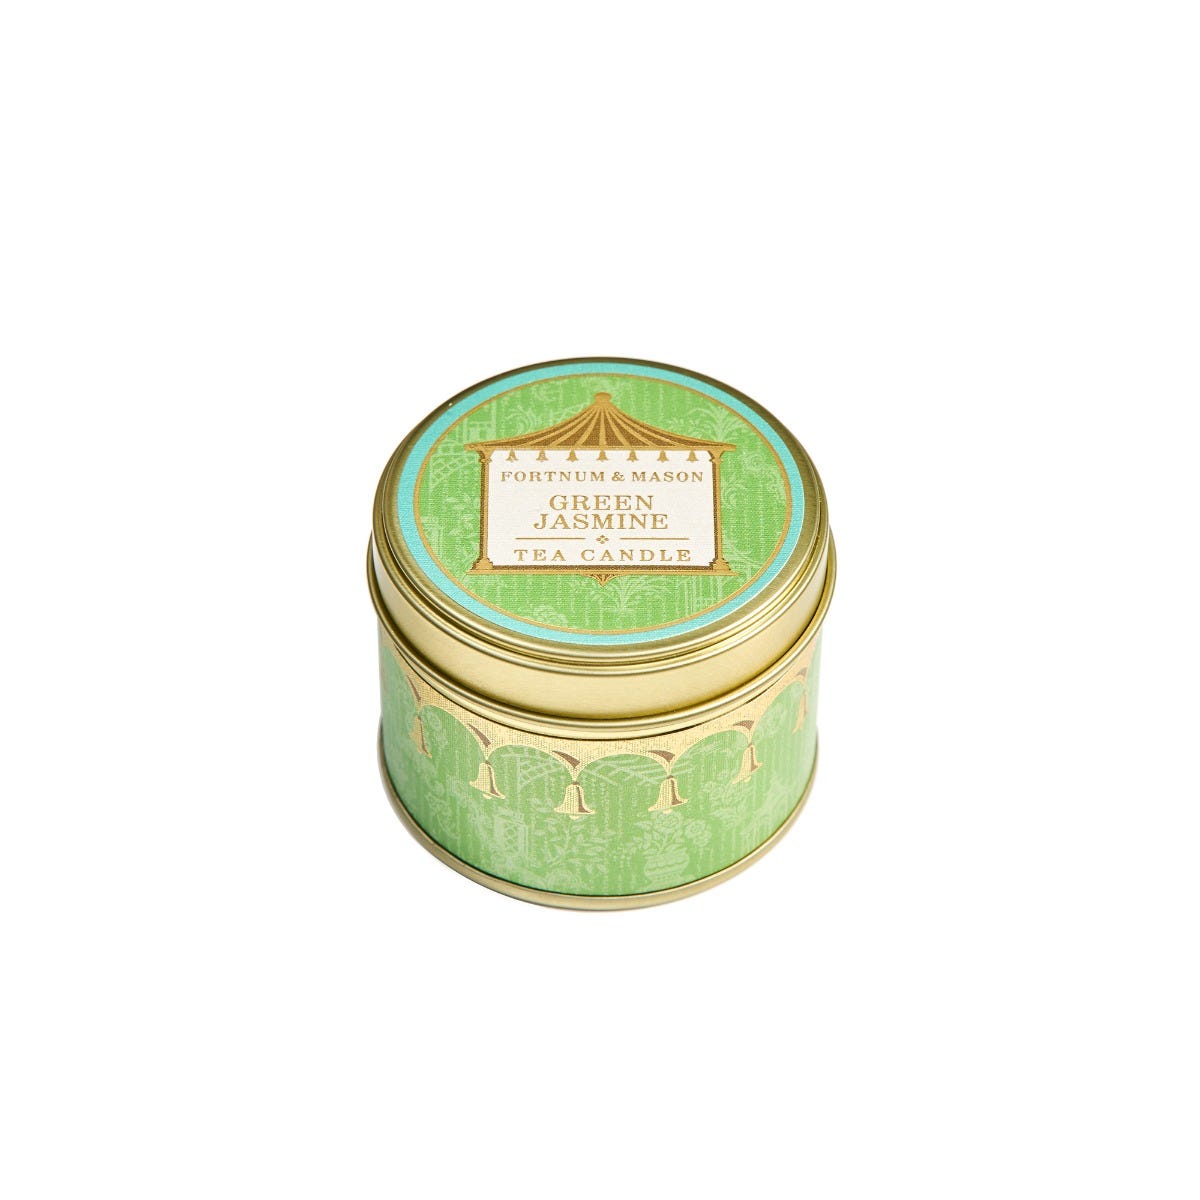 Jasmine Travel Tea Tin Candle in Green, 70g, Fortnum & Mason